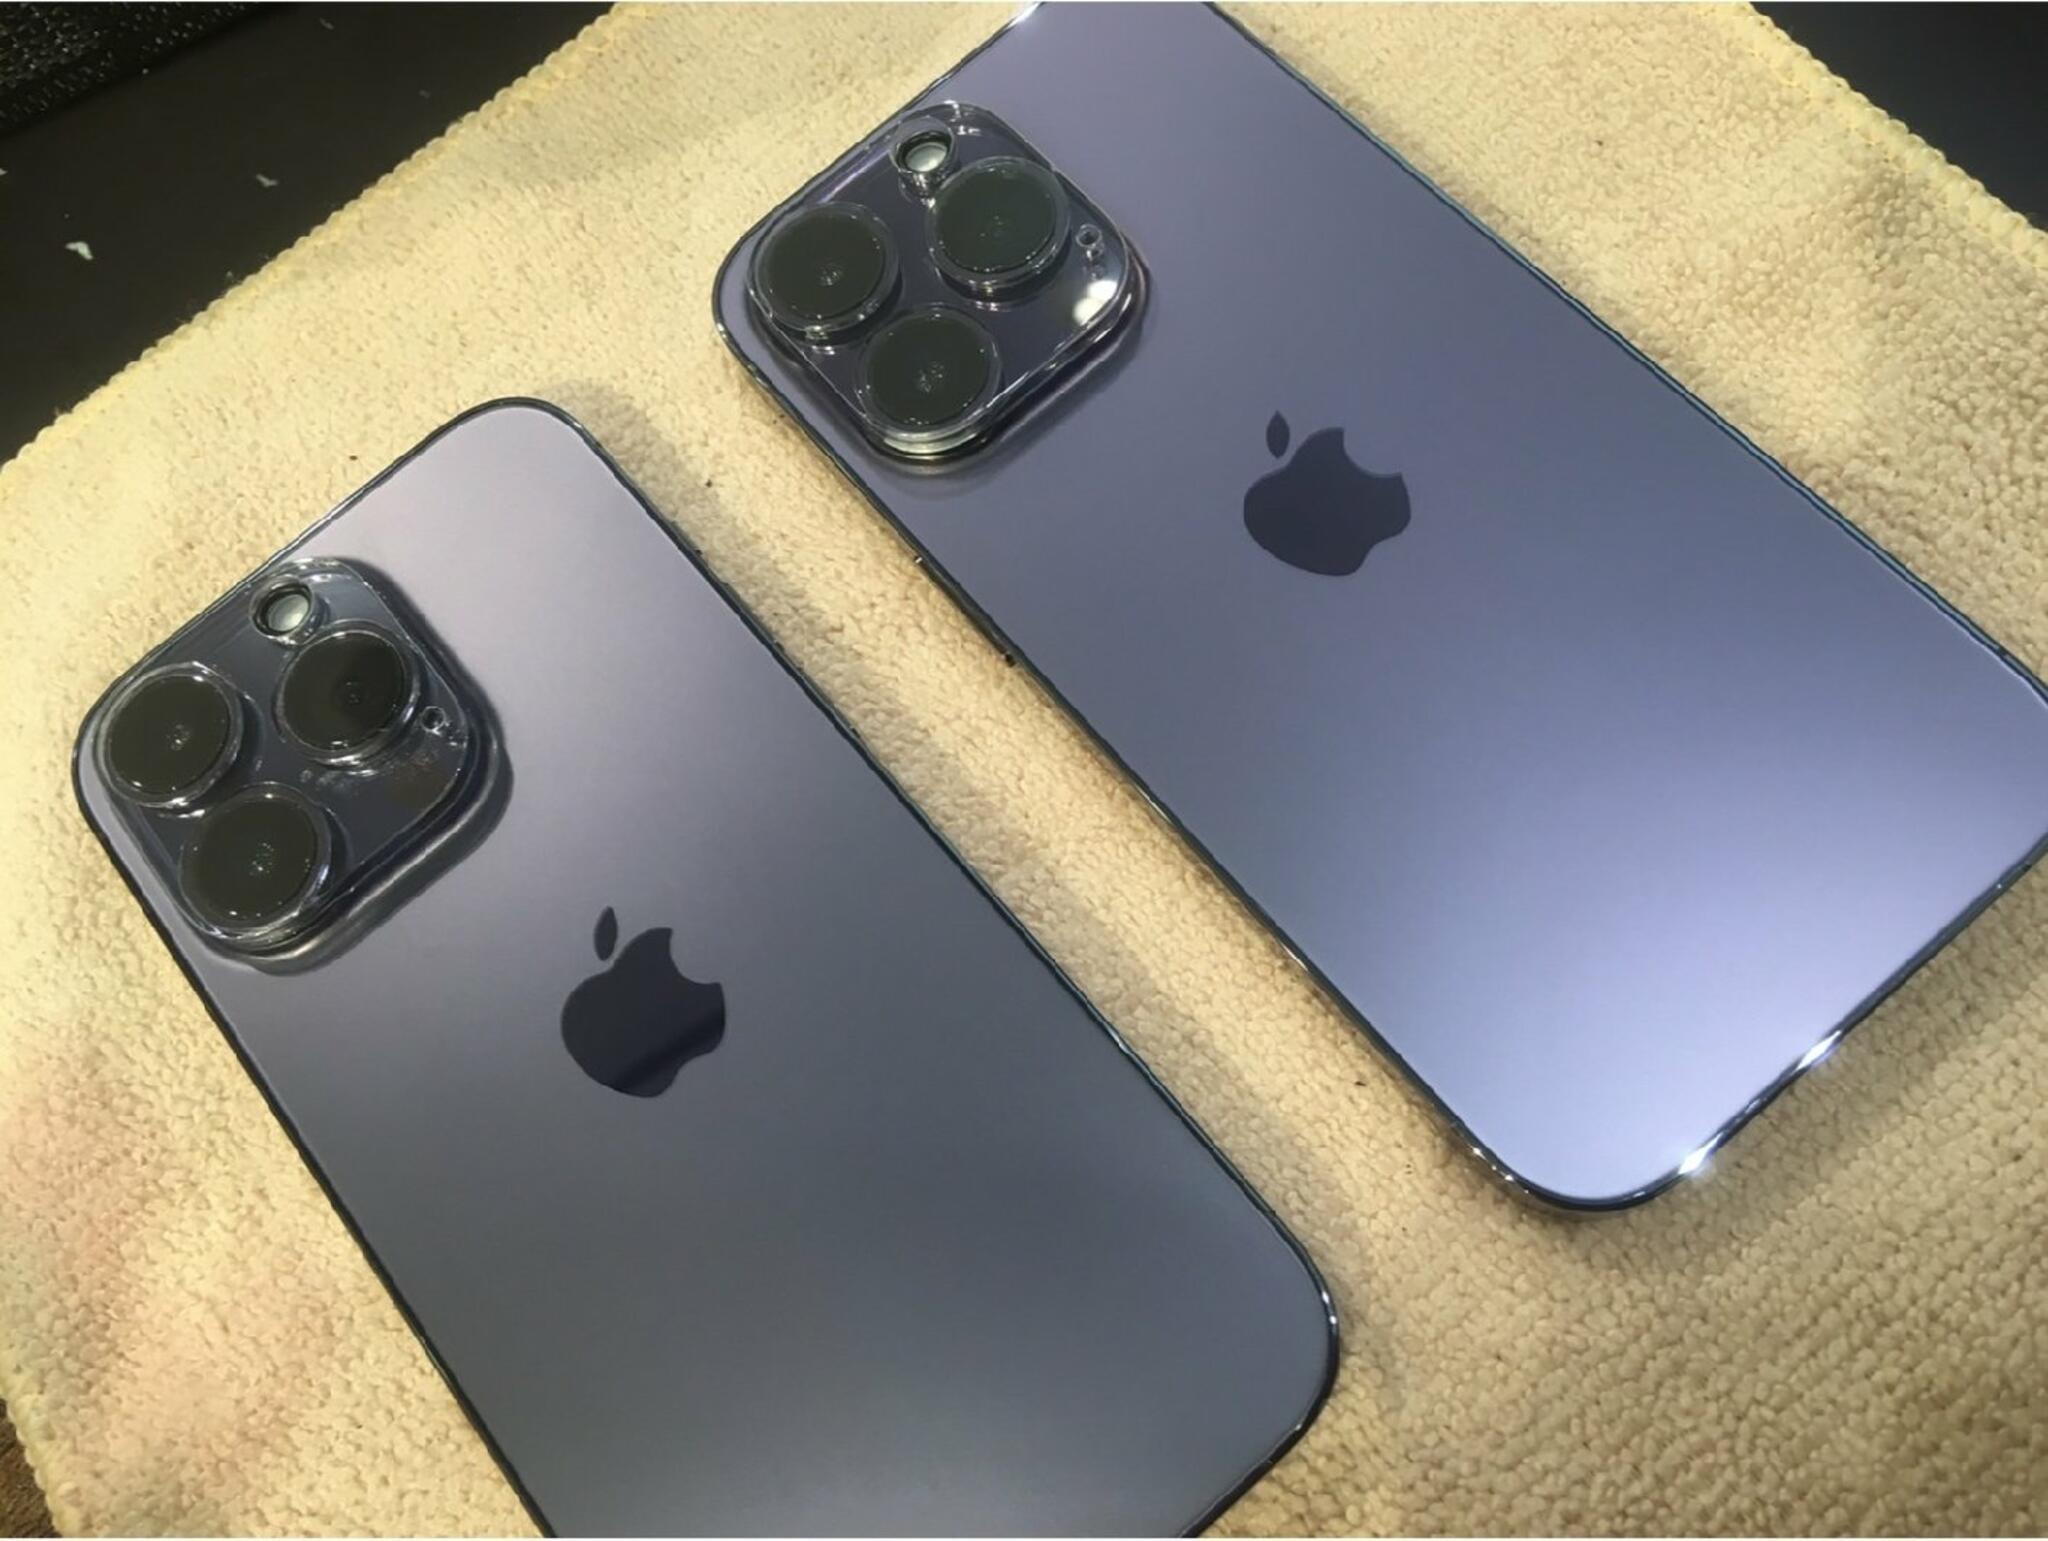 iPhone・iPad・Switch修理店 スマートクール イオンモール広島祇園店からのお知らせ(レンズカバーでカメラレンズを保護しましょう)に関する写真